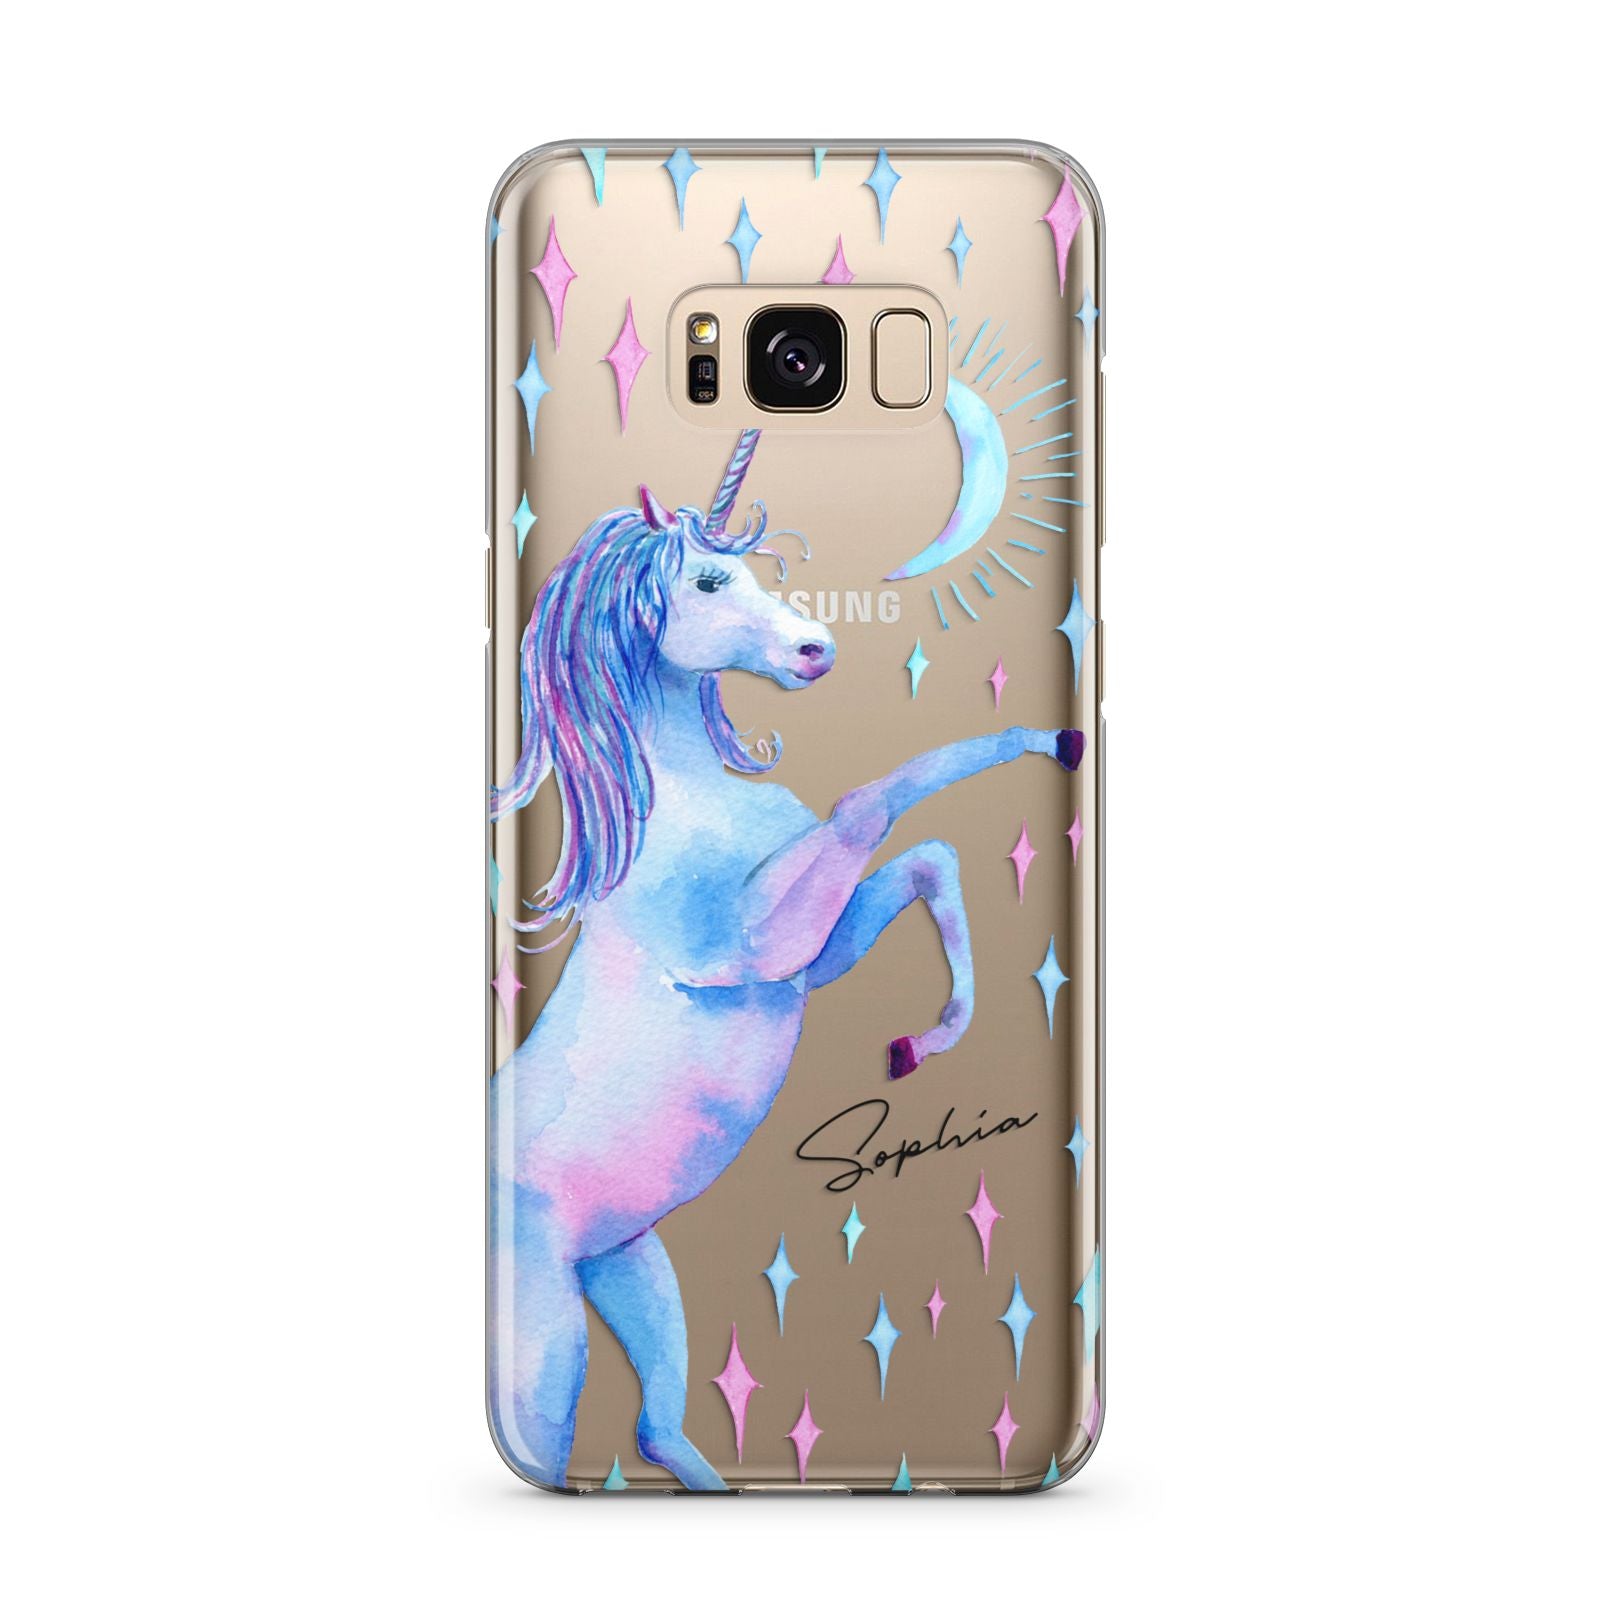 Personalised Unicorn Name Samsung Galaxy S8 Plus Case